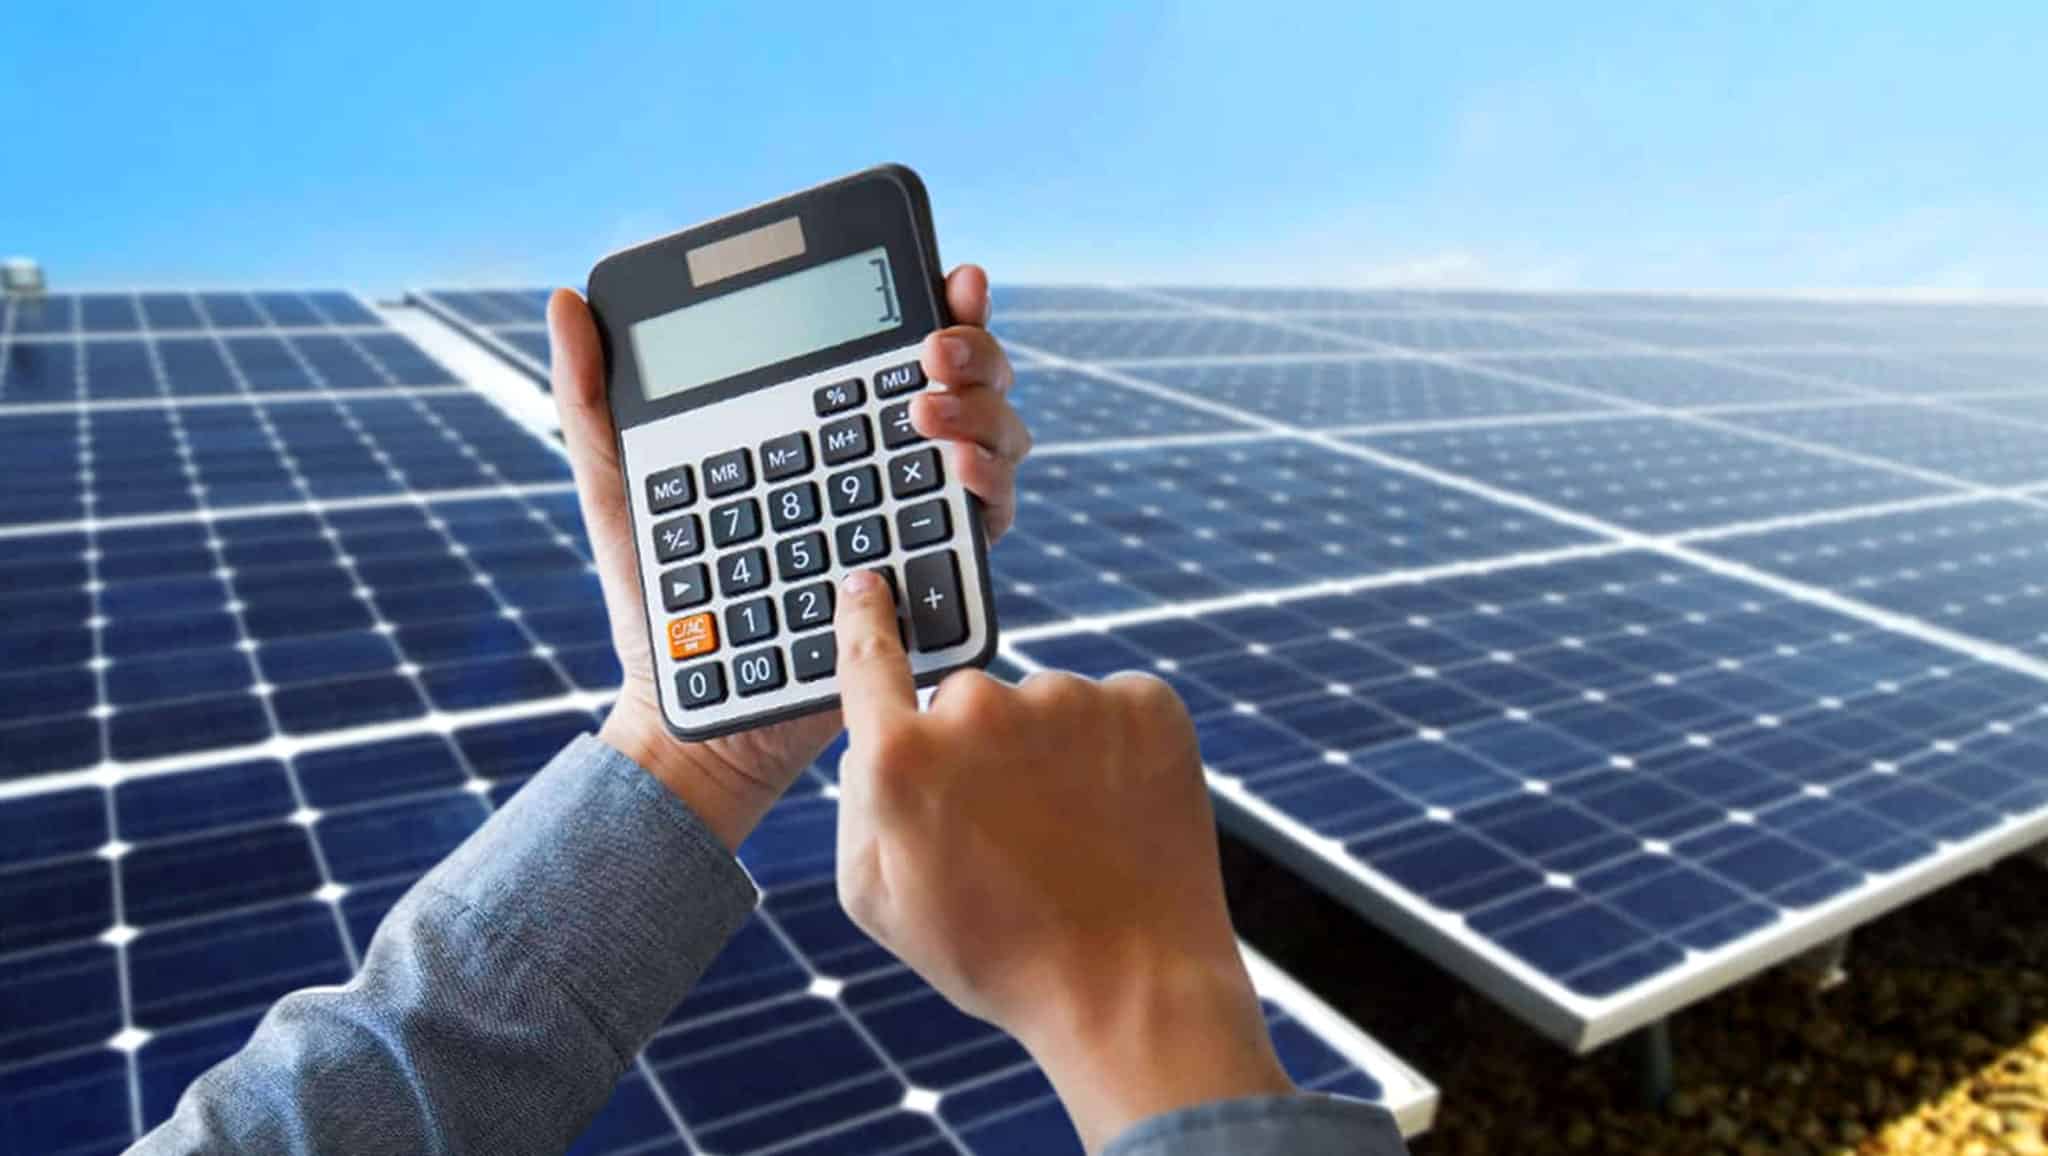 Solar calculator image